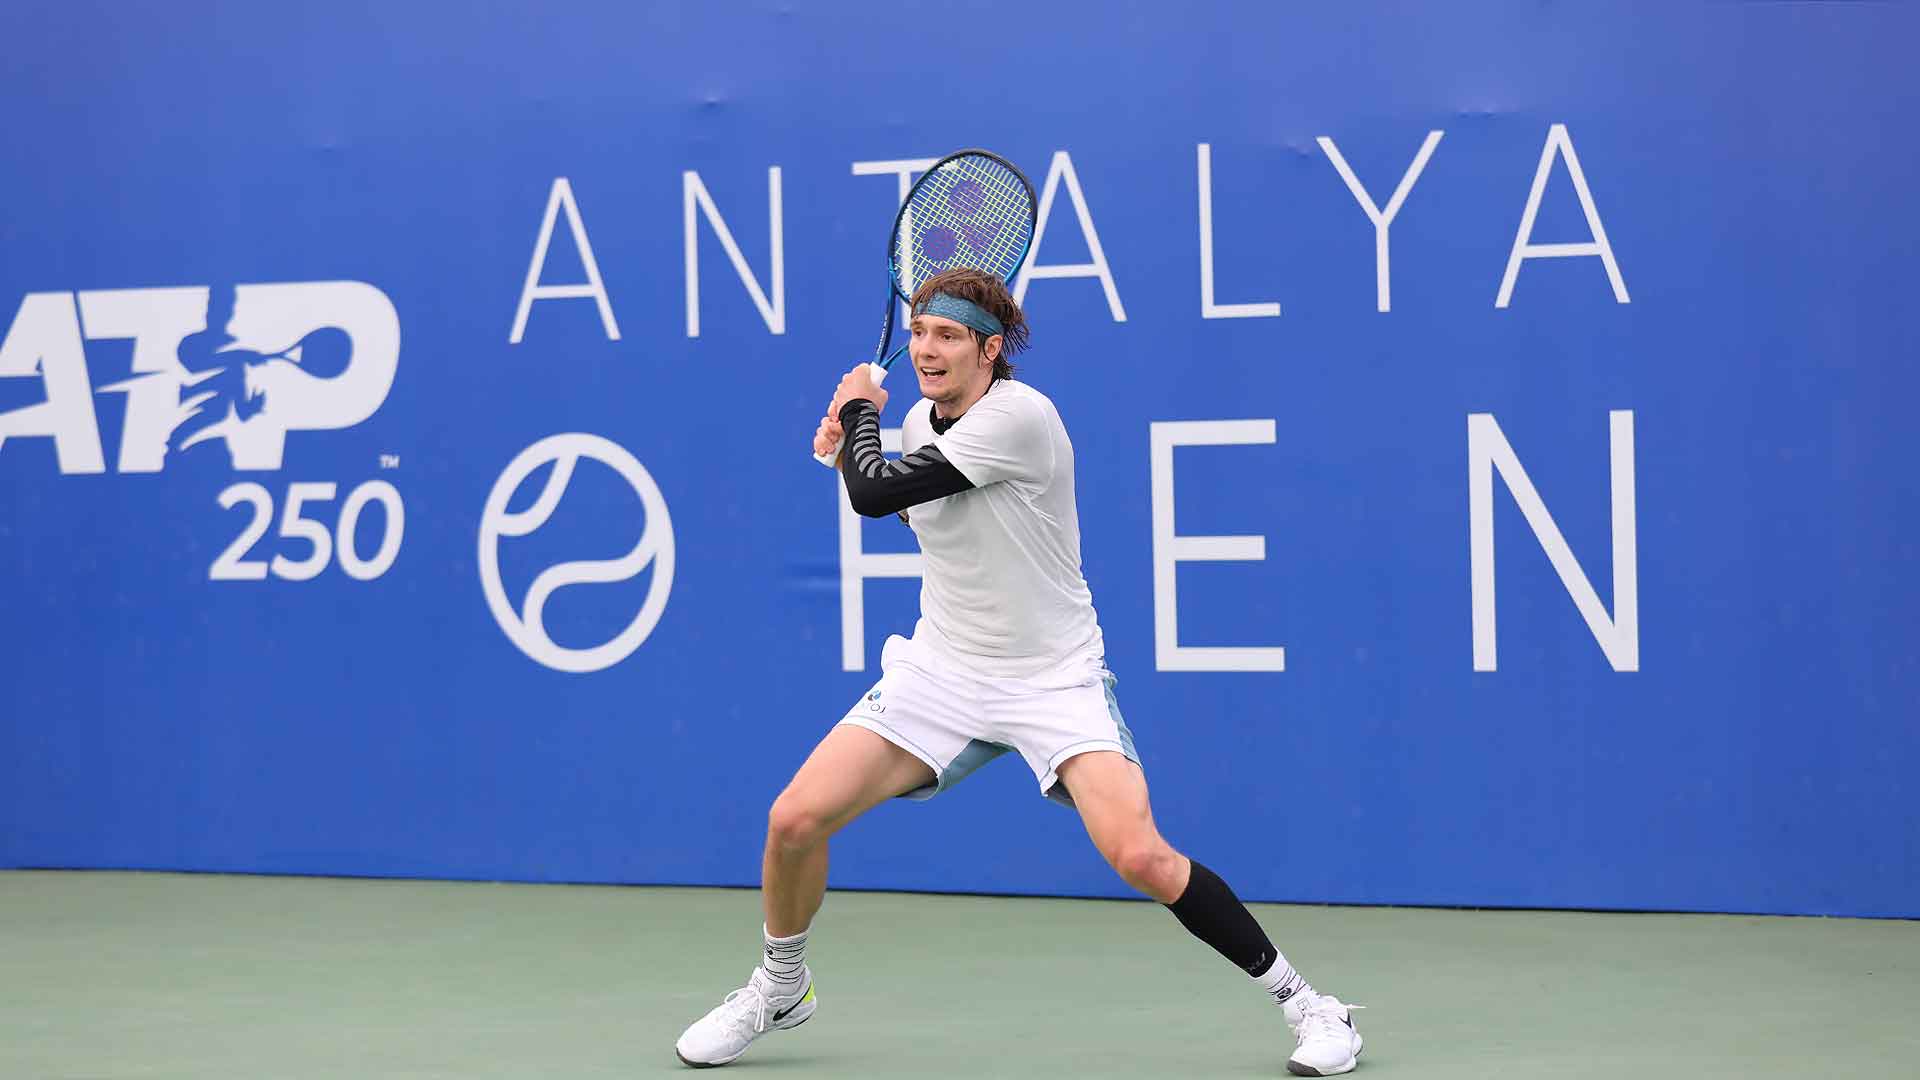 Antalya ATP 2021. Теннис Анталья. Сиа Sports.